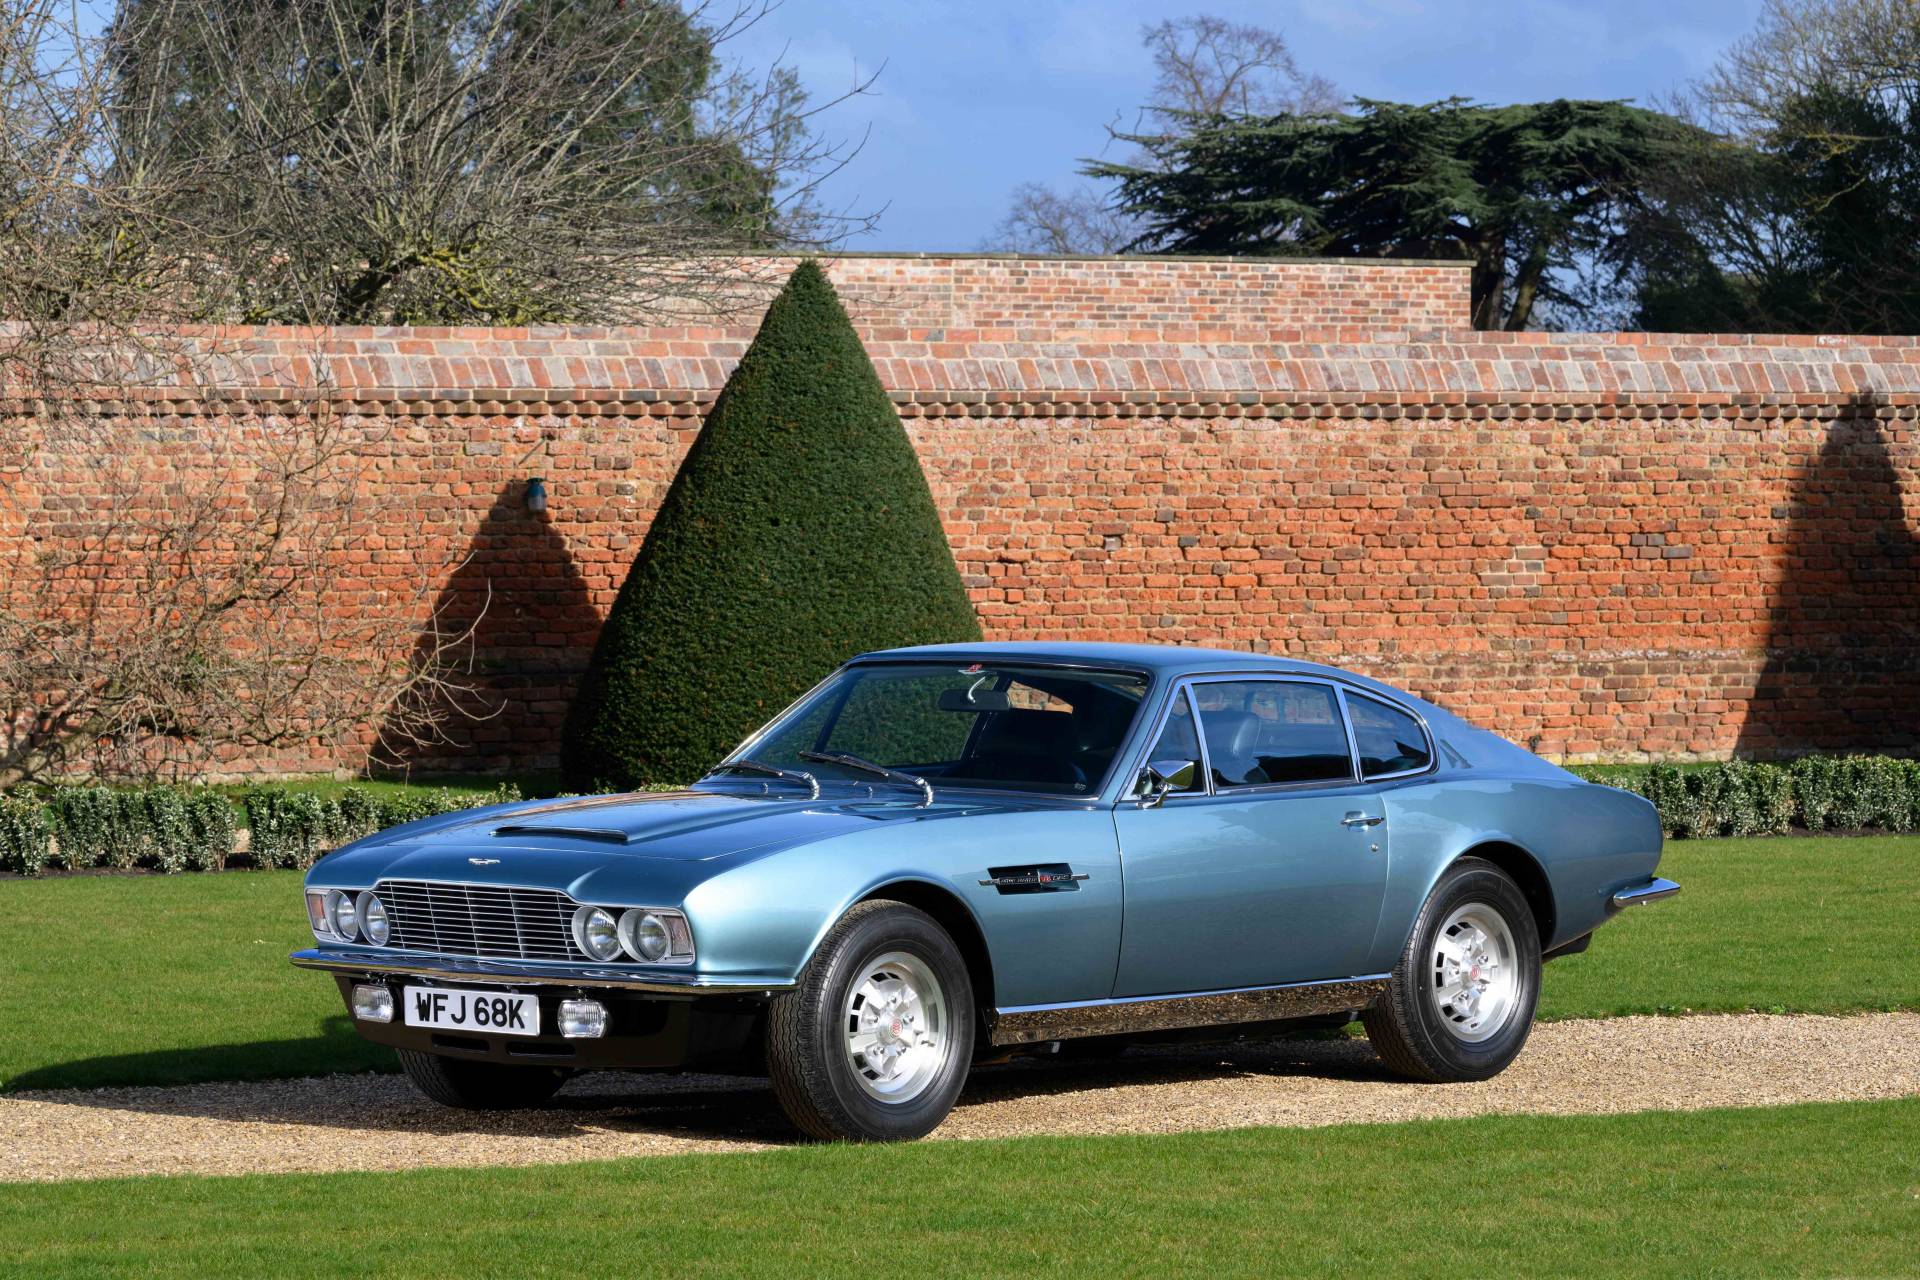 For Sale: Aston Martin Dbs V8 (1971) Offered For £225,000